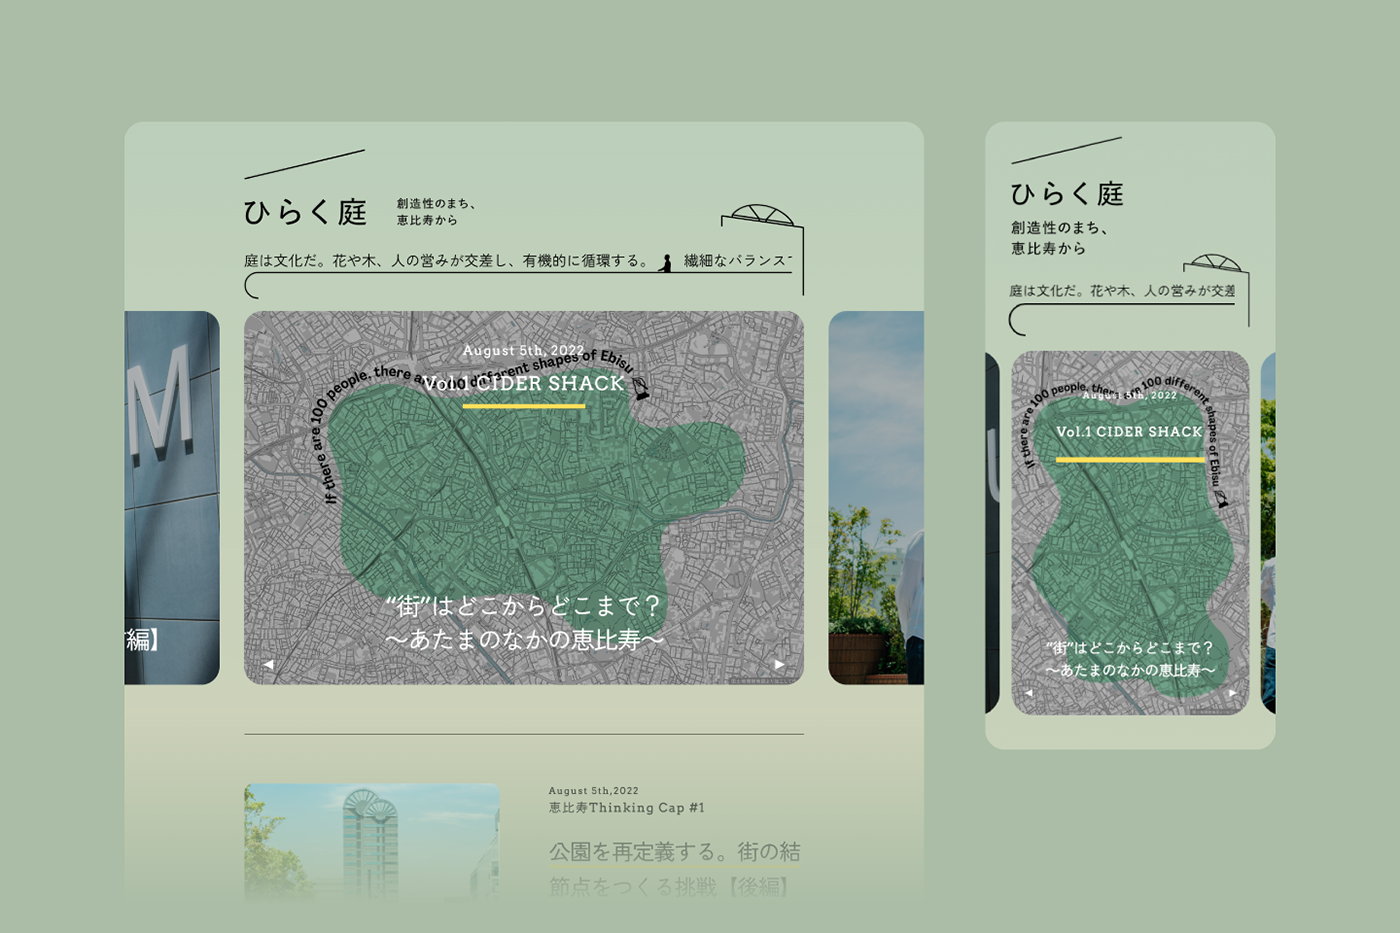 artcles edit japan magazine tokyo Web Design  Website